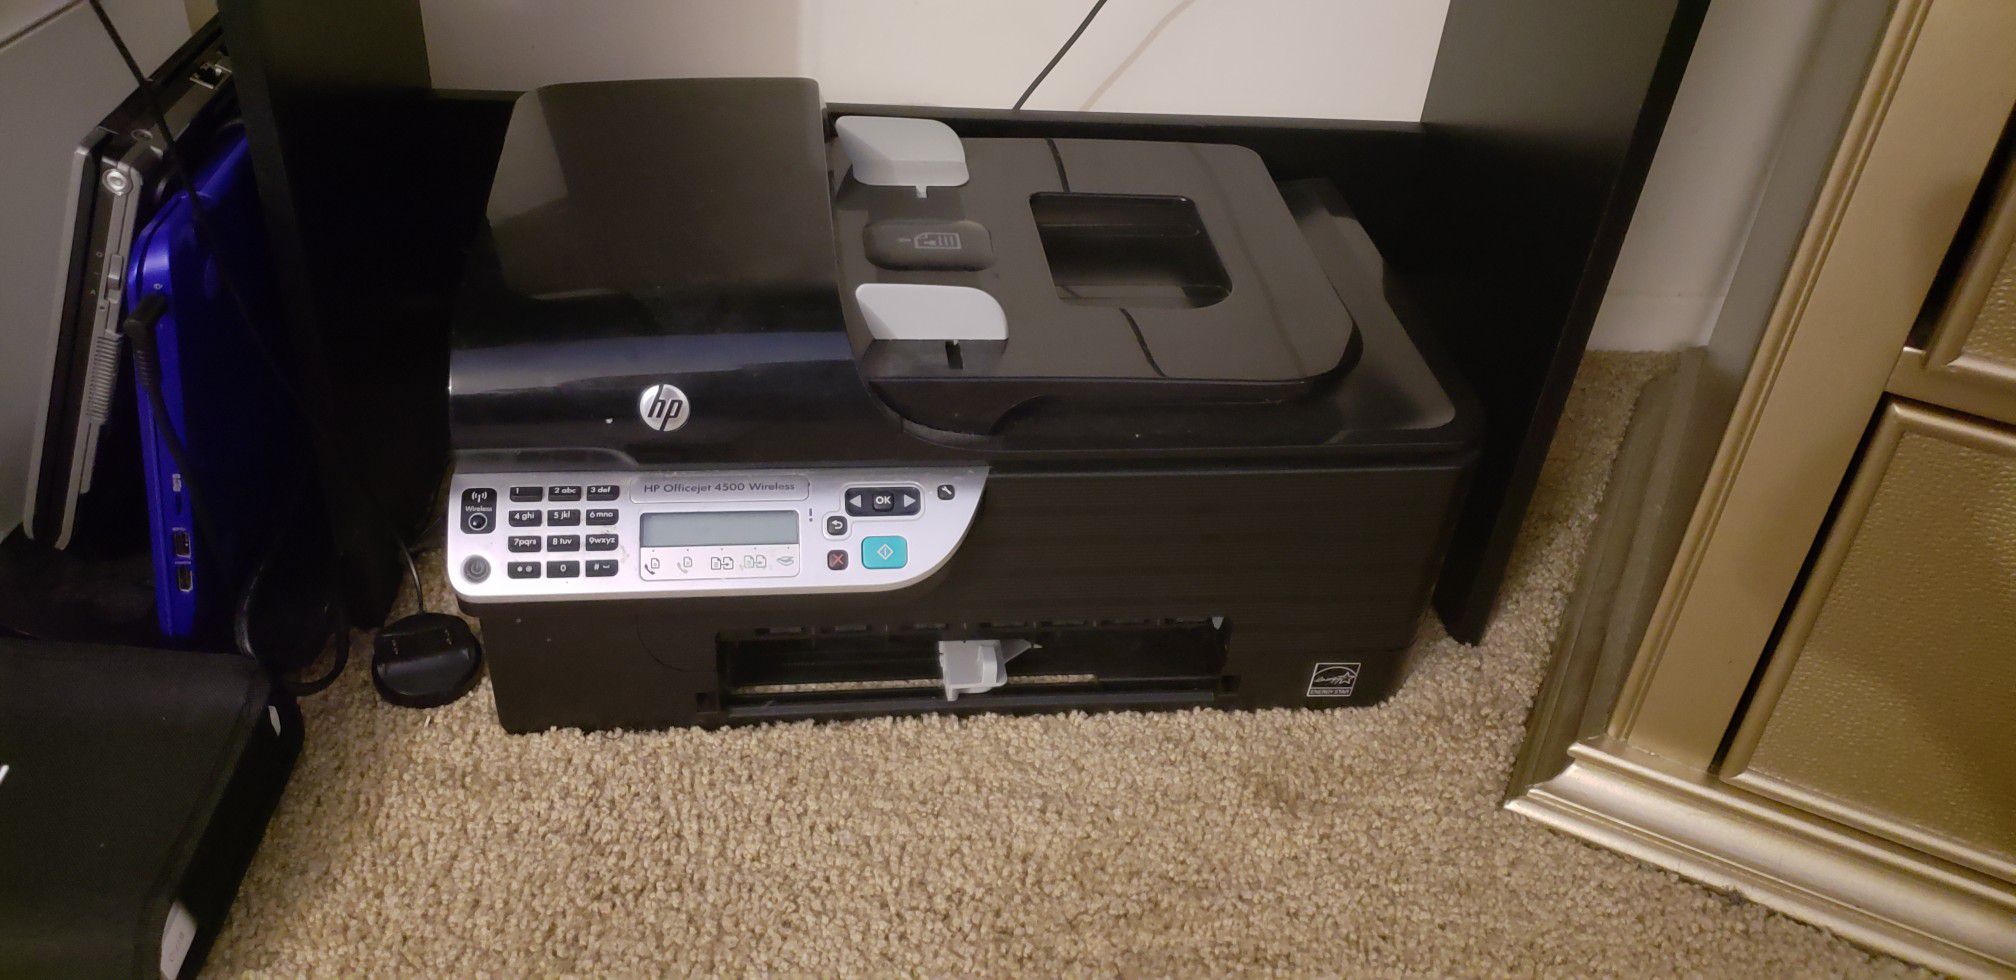 Used HP printer